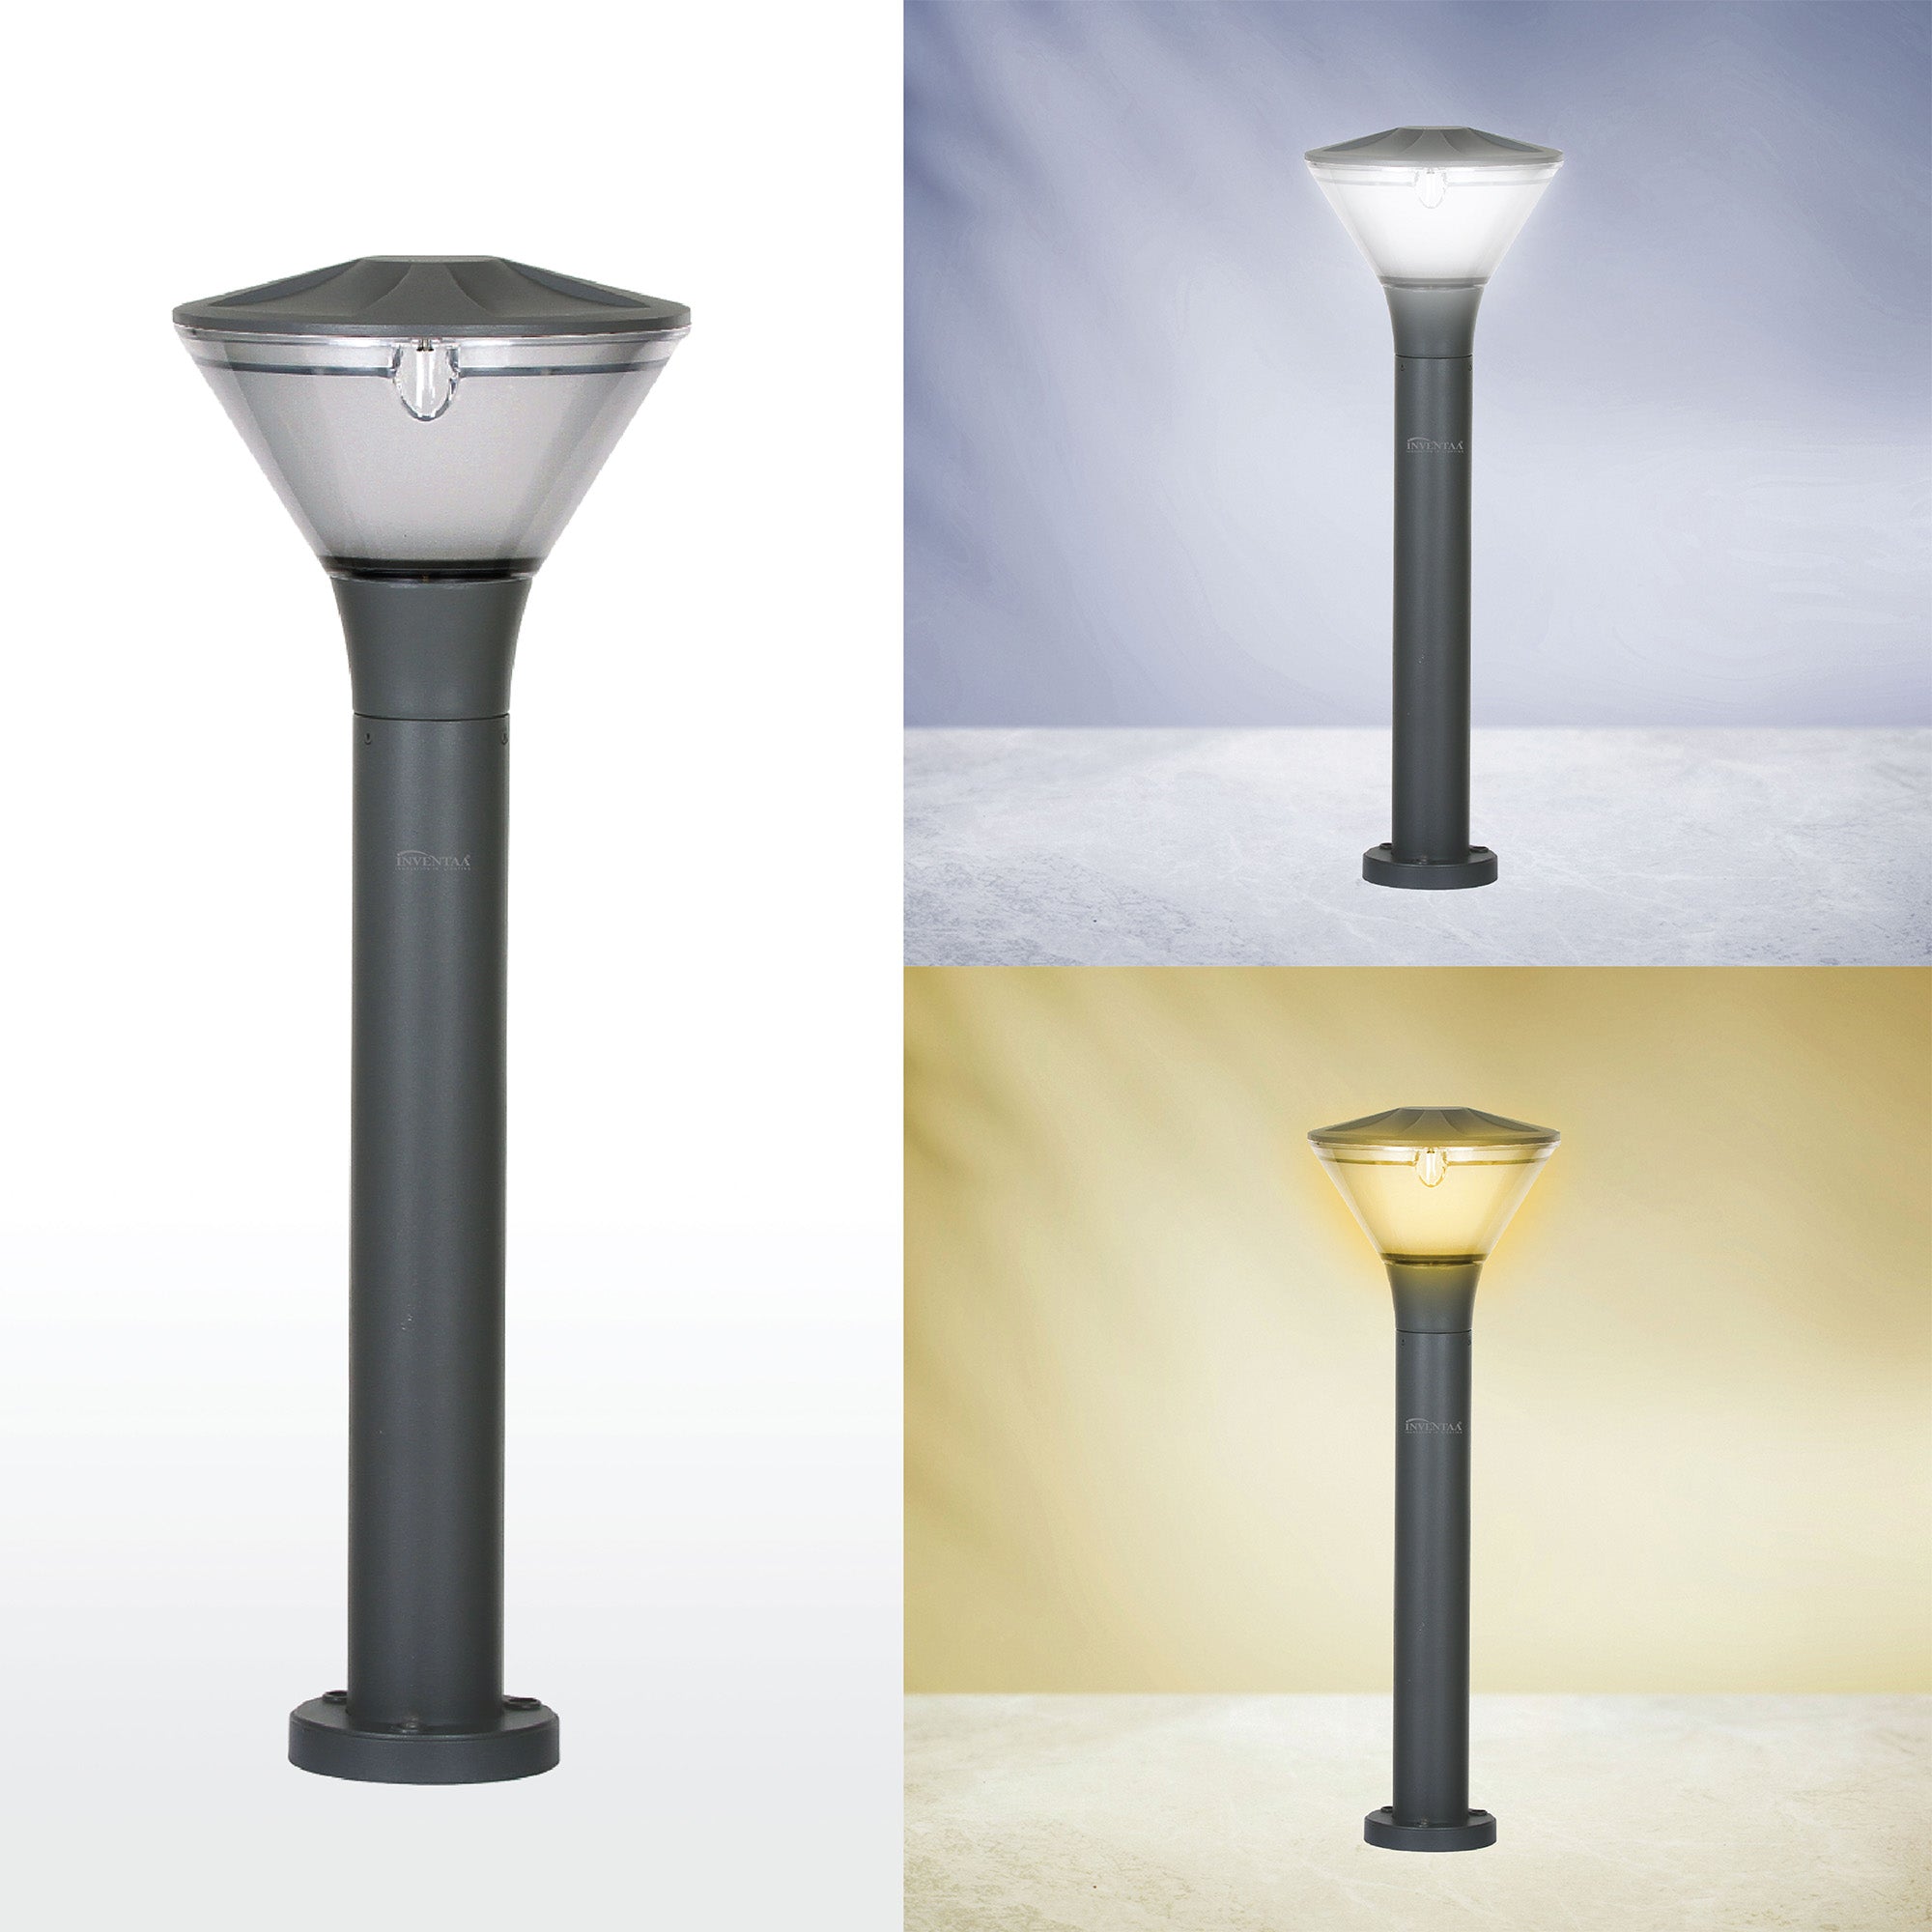 Cool and warm lighting comparison of Yash 2 feet led garden bollard light #size_2 feet